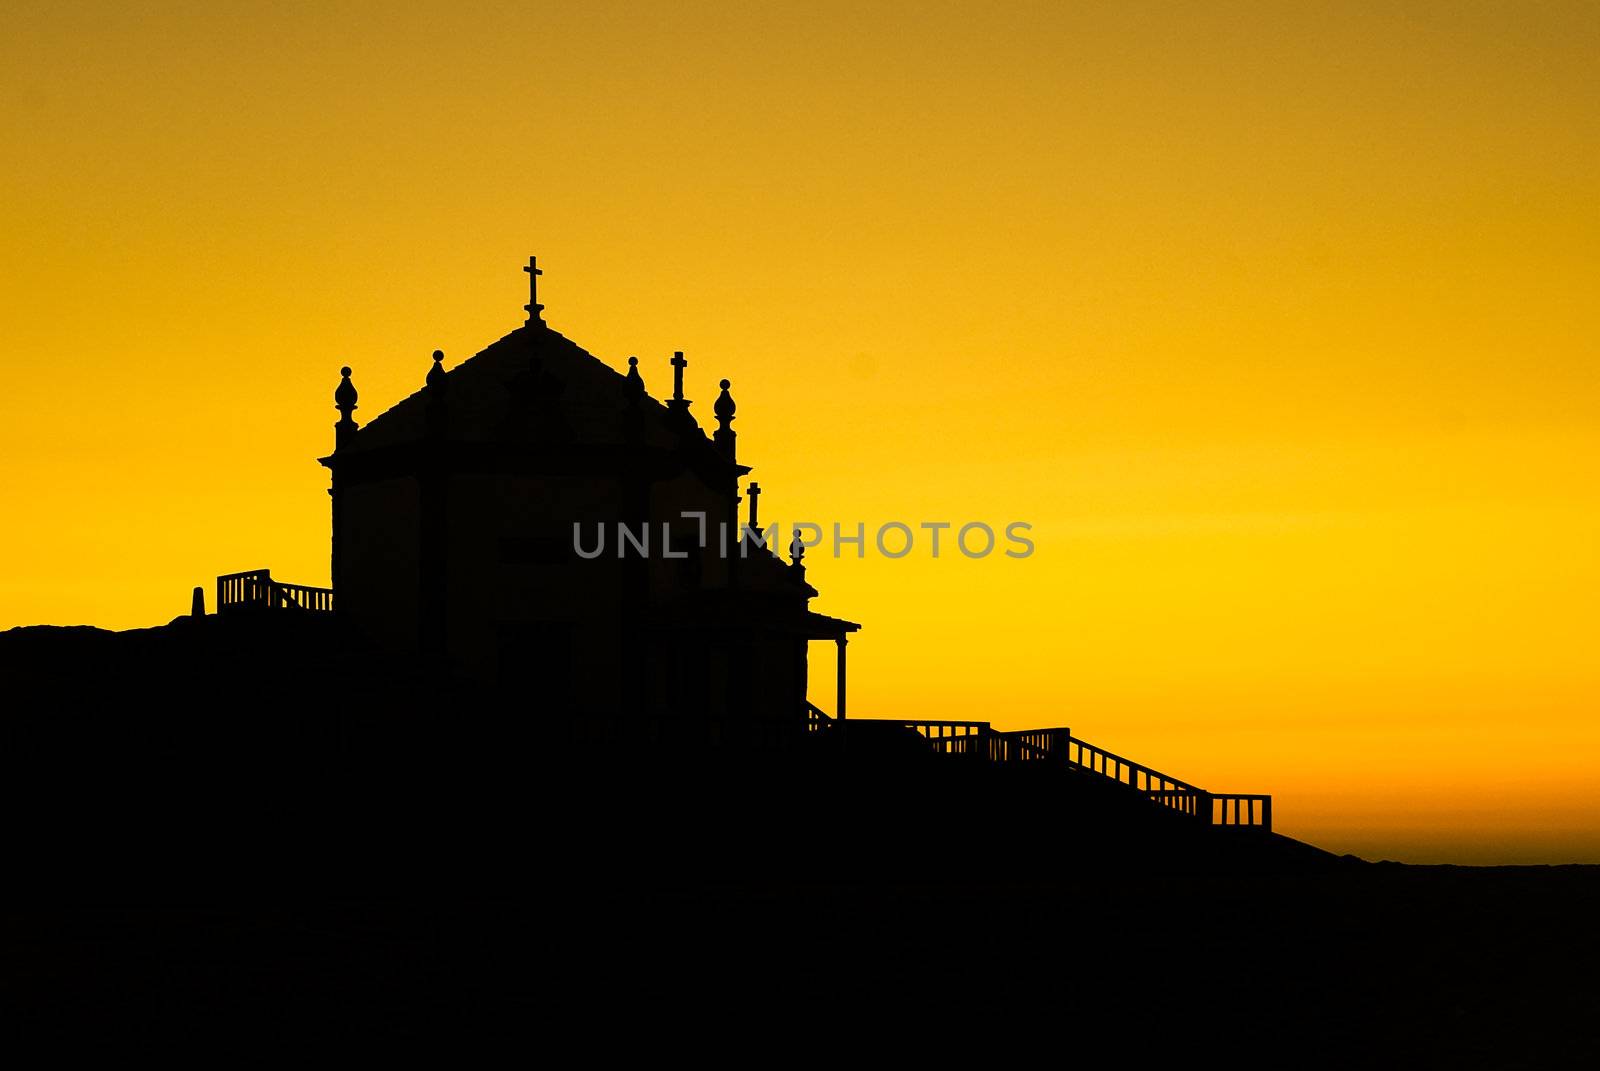  Sunset chapel by homydesign